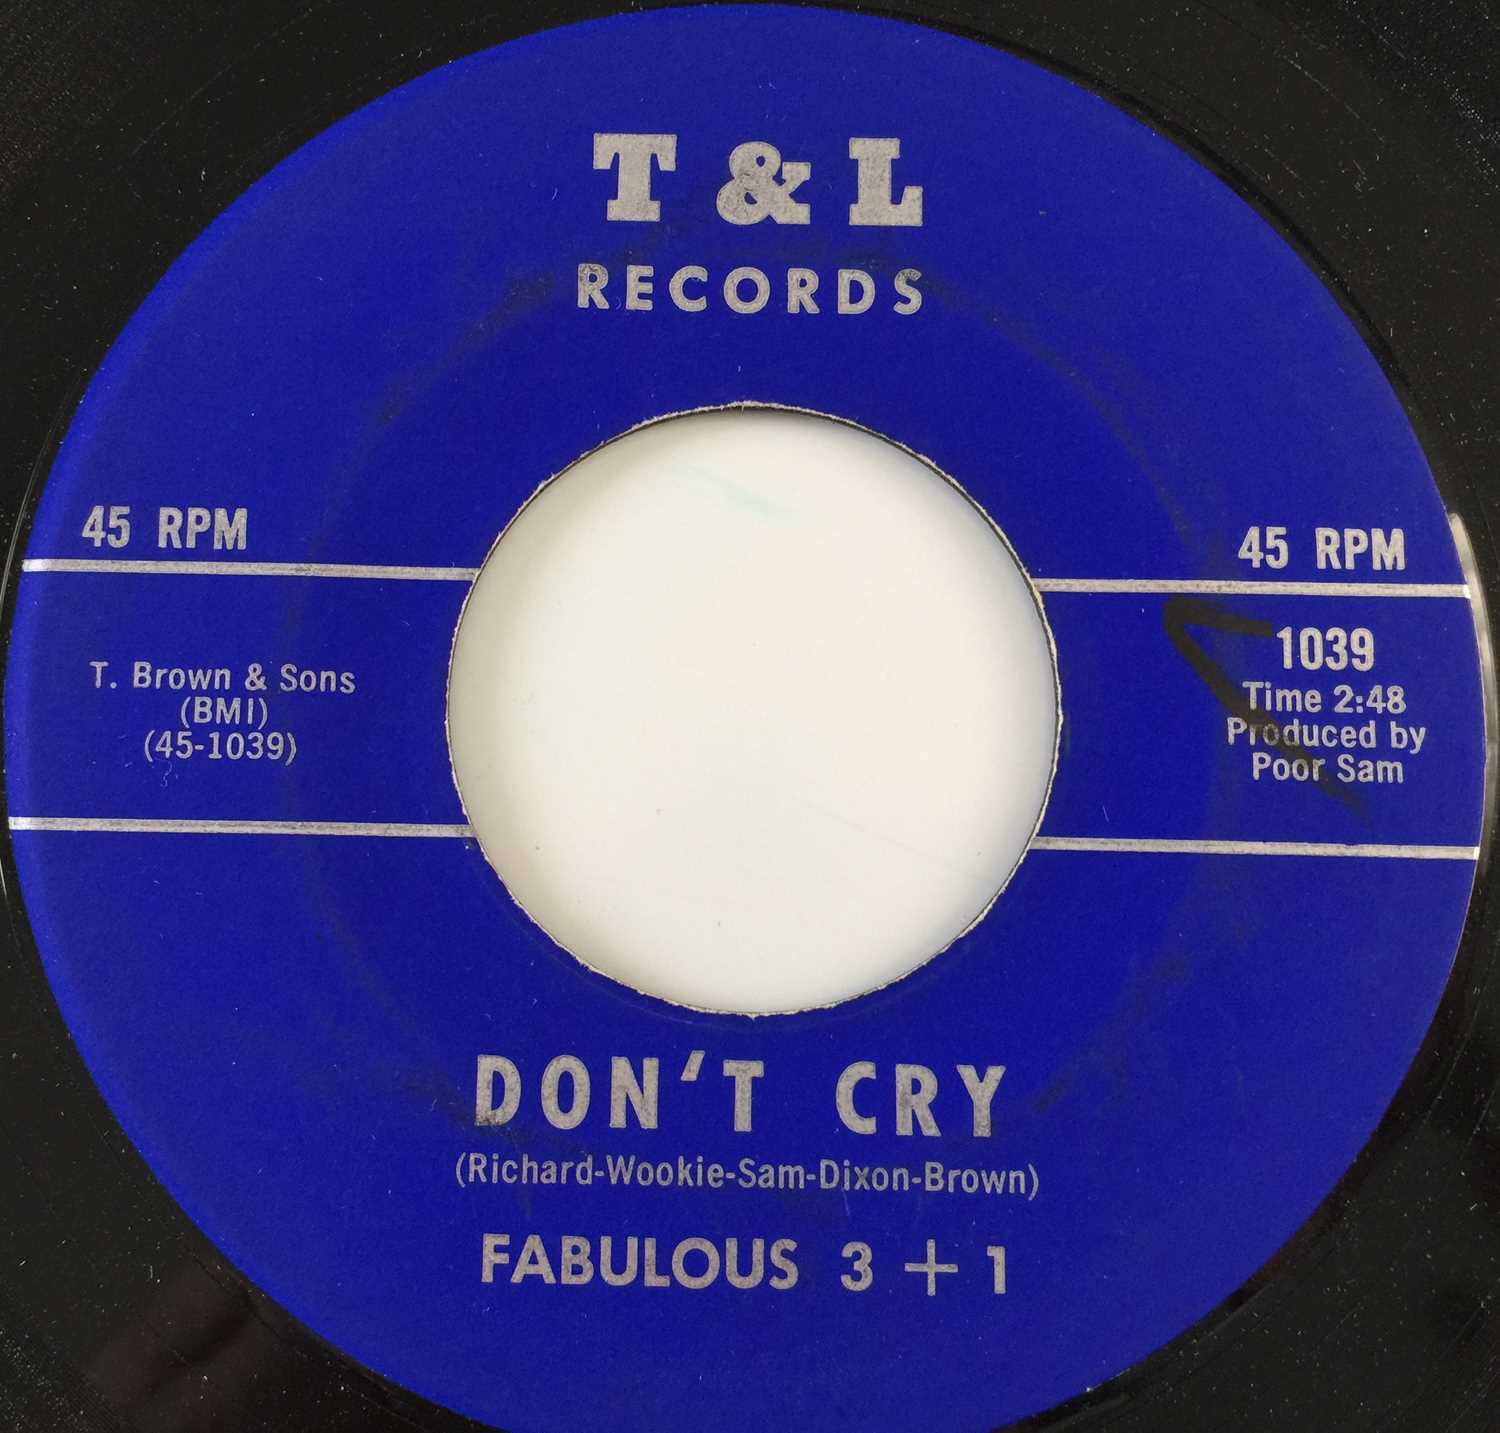 Lot 15 - FABULOUS 3 + 1 - DON'T CRY/ BAD GIRL 7" (US SOUL - T&L RECORDS 1039)